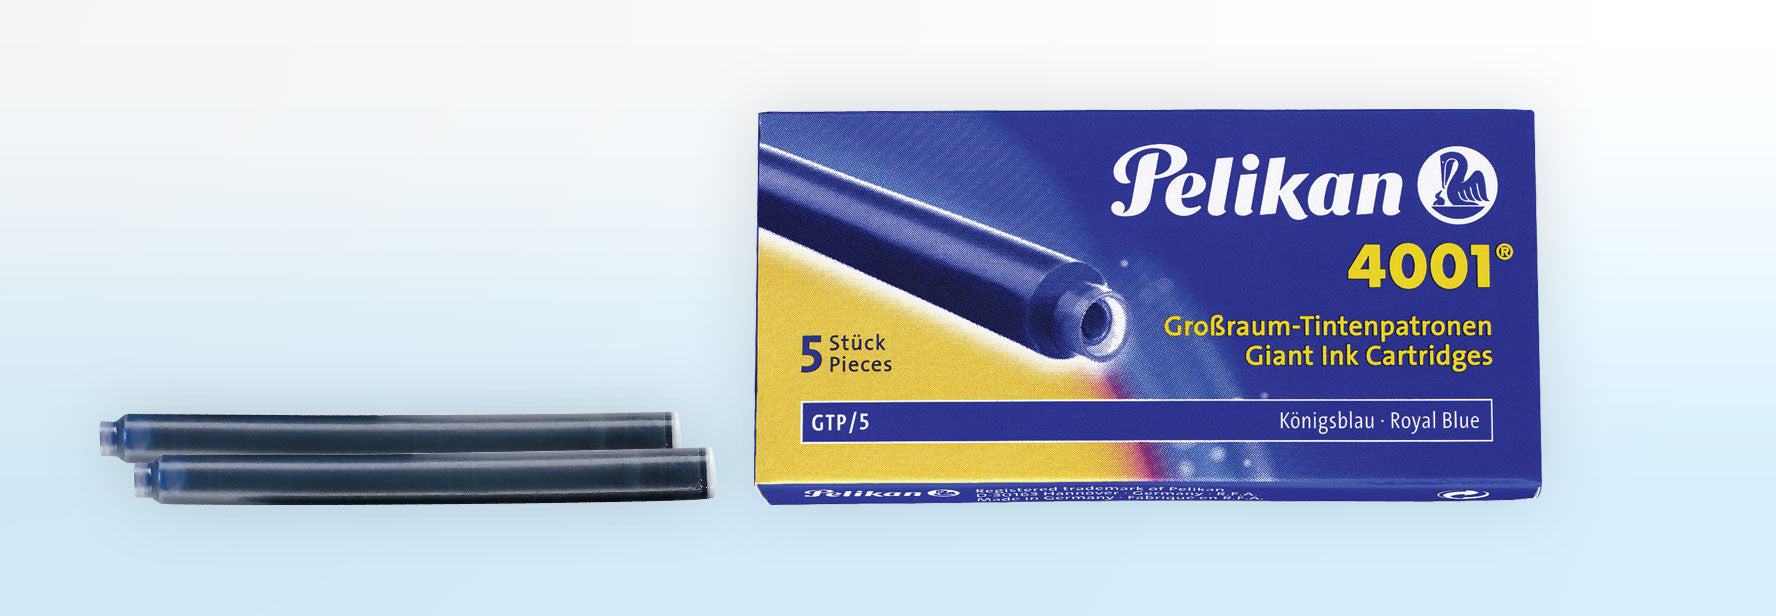 Pelikan  4001 Ink Cartridges